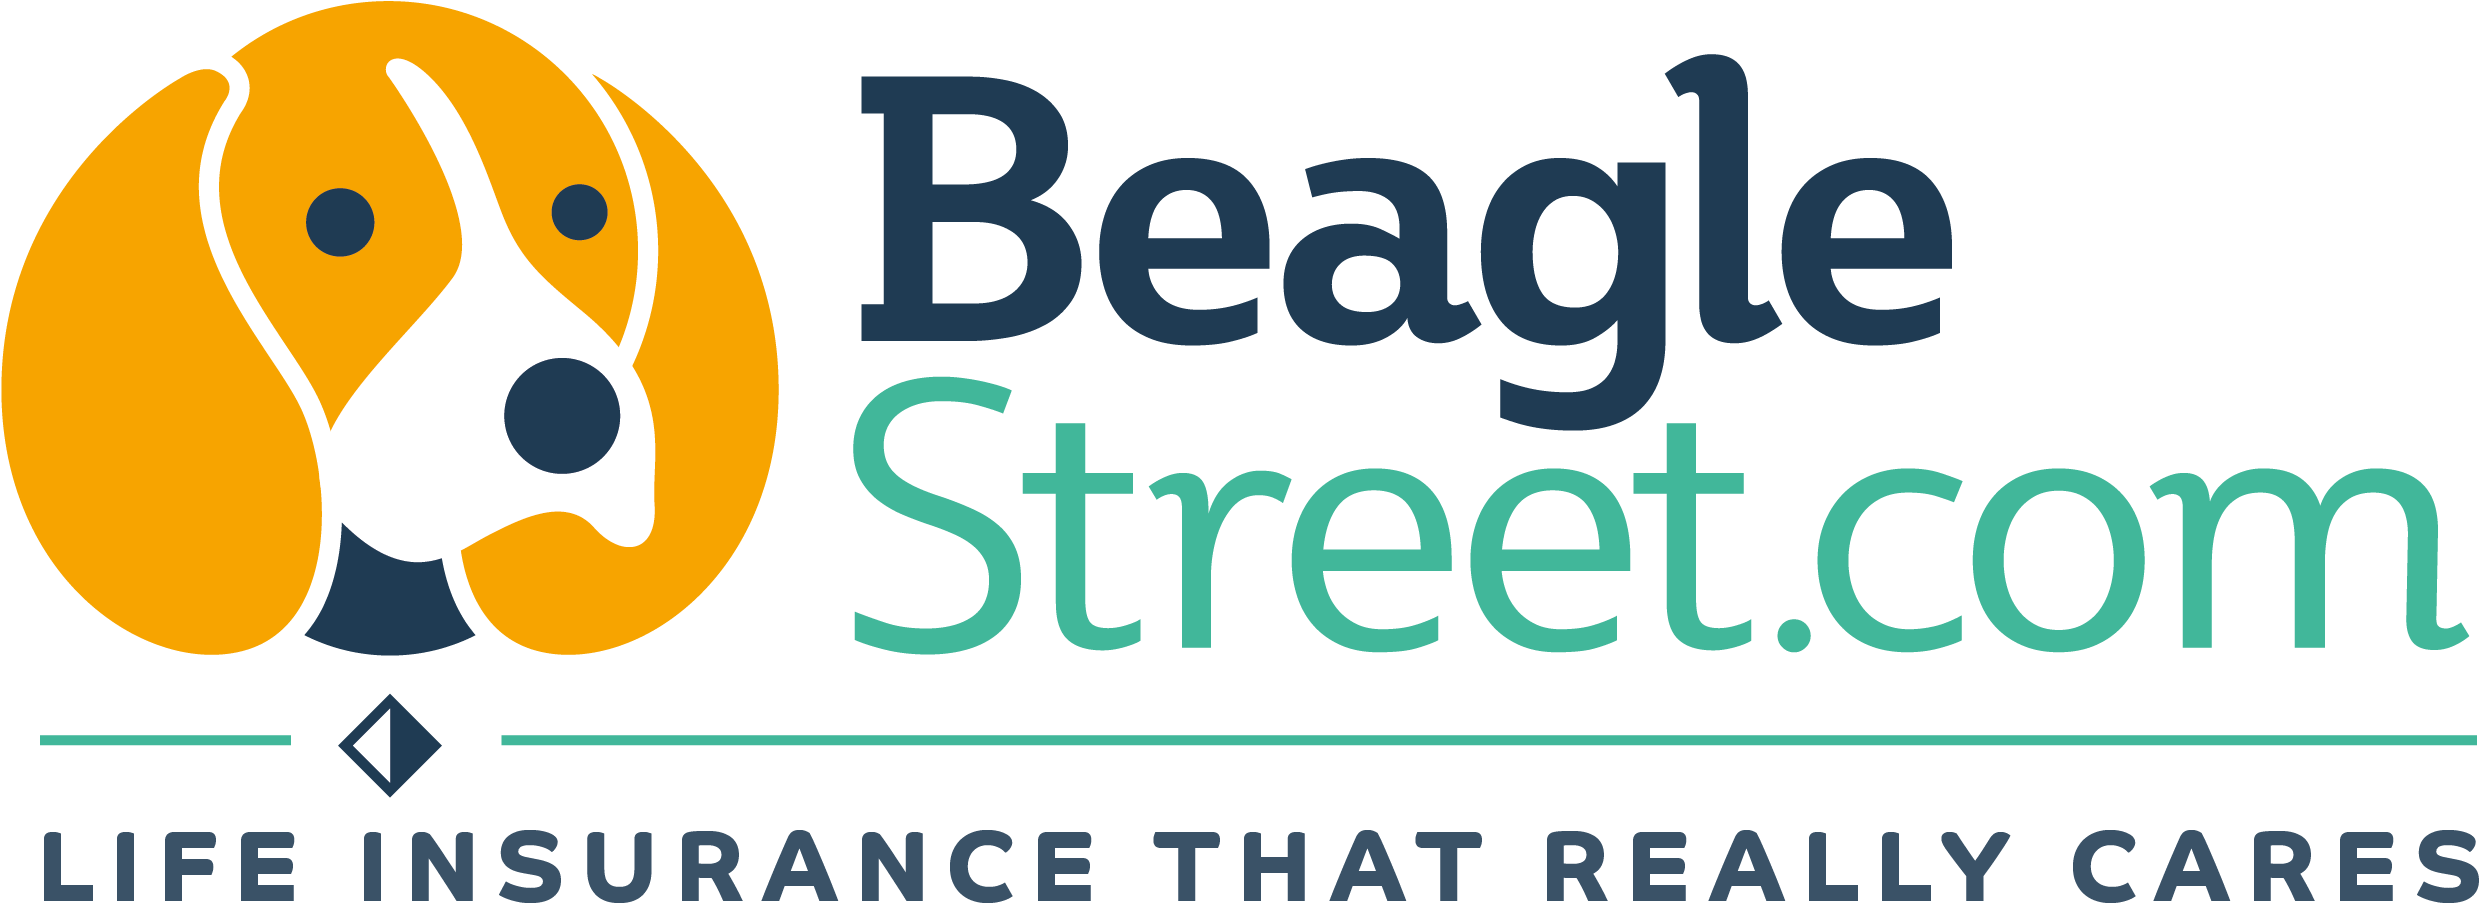 Beagle Street Logo - Beagle Street (2499x944), Png Download